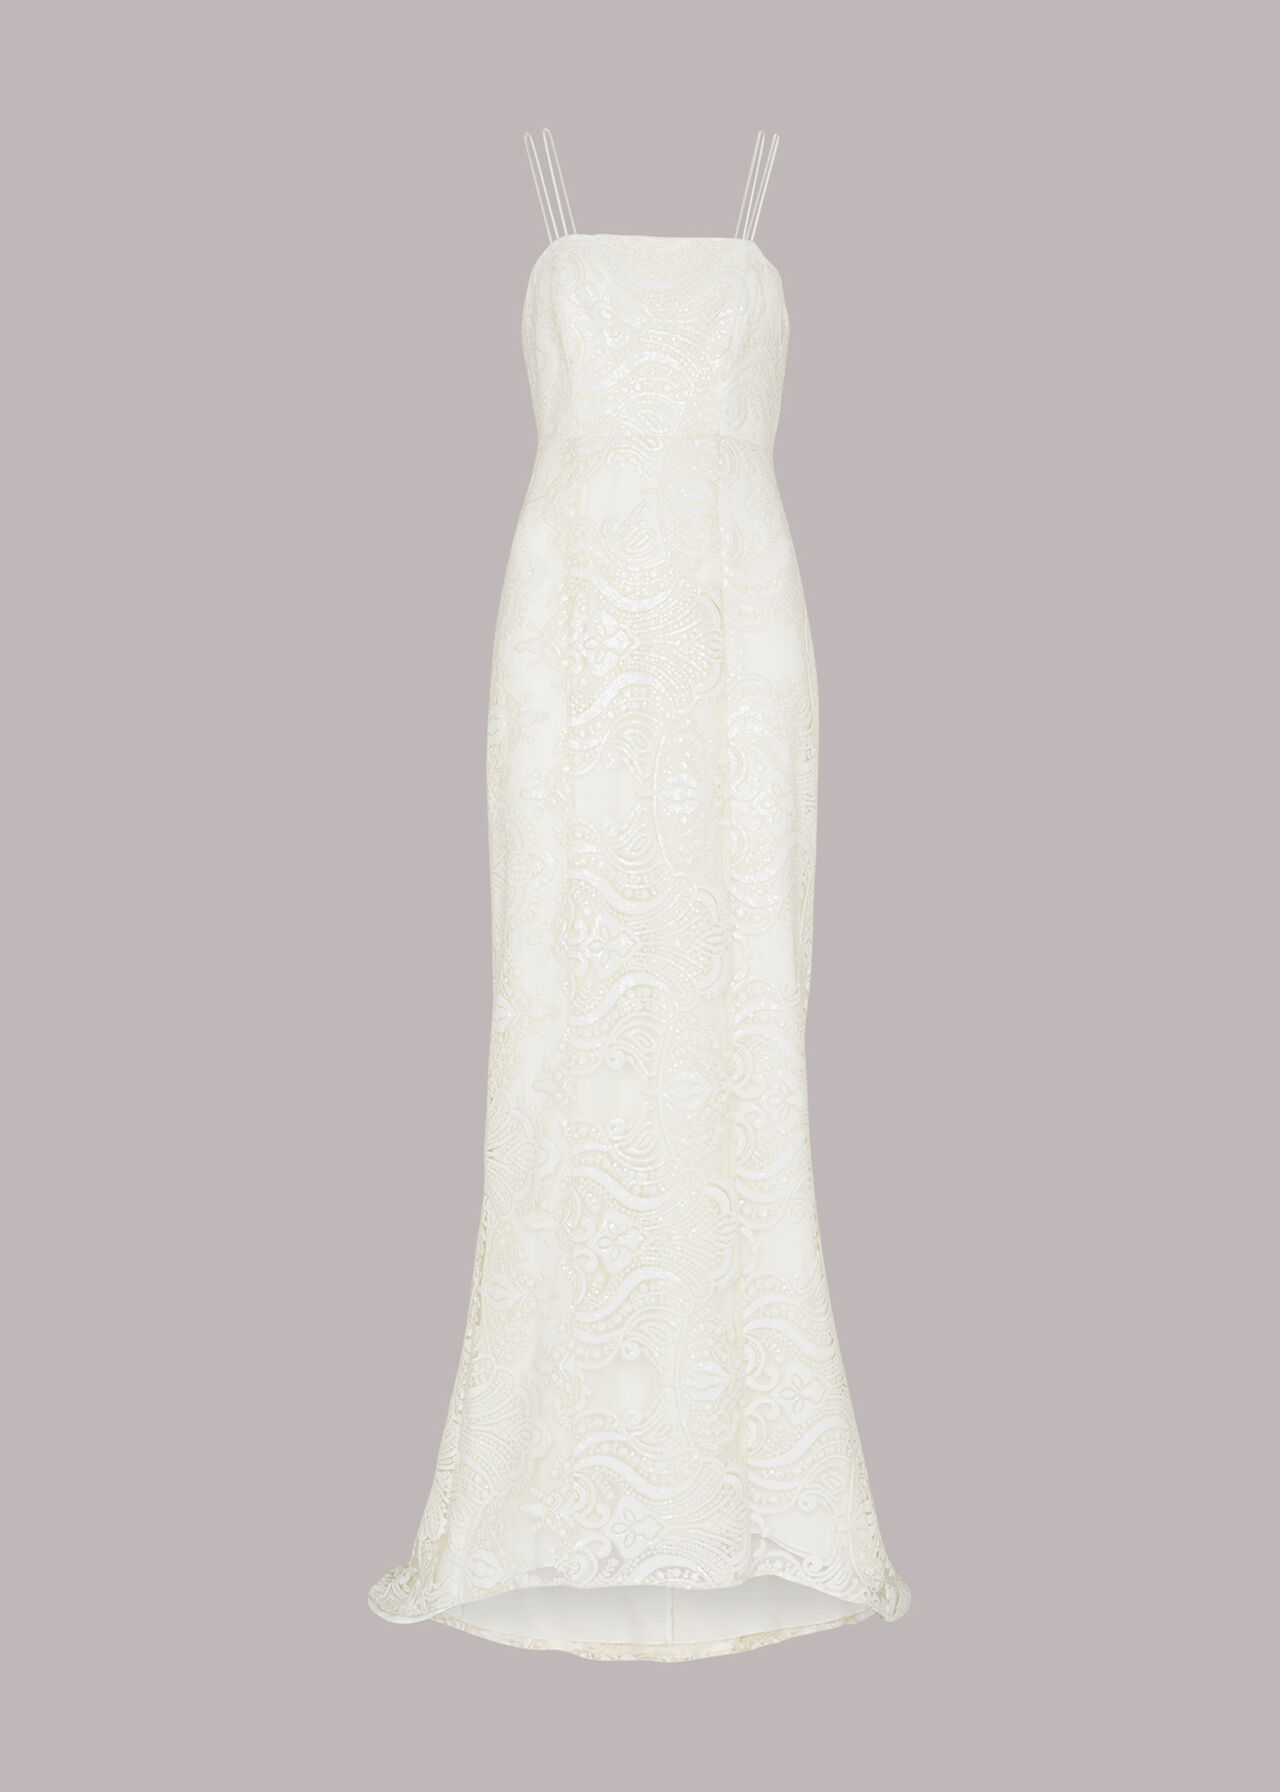 Lorelei Sequin Wedding Dress